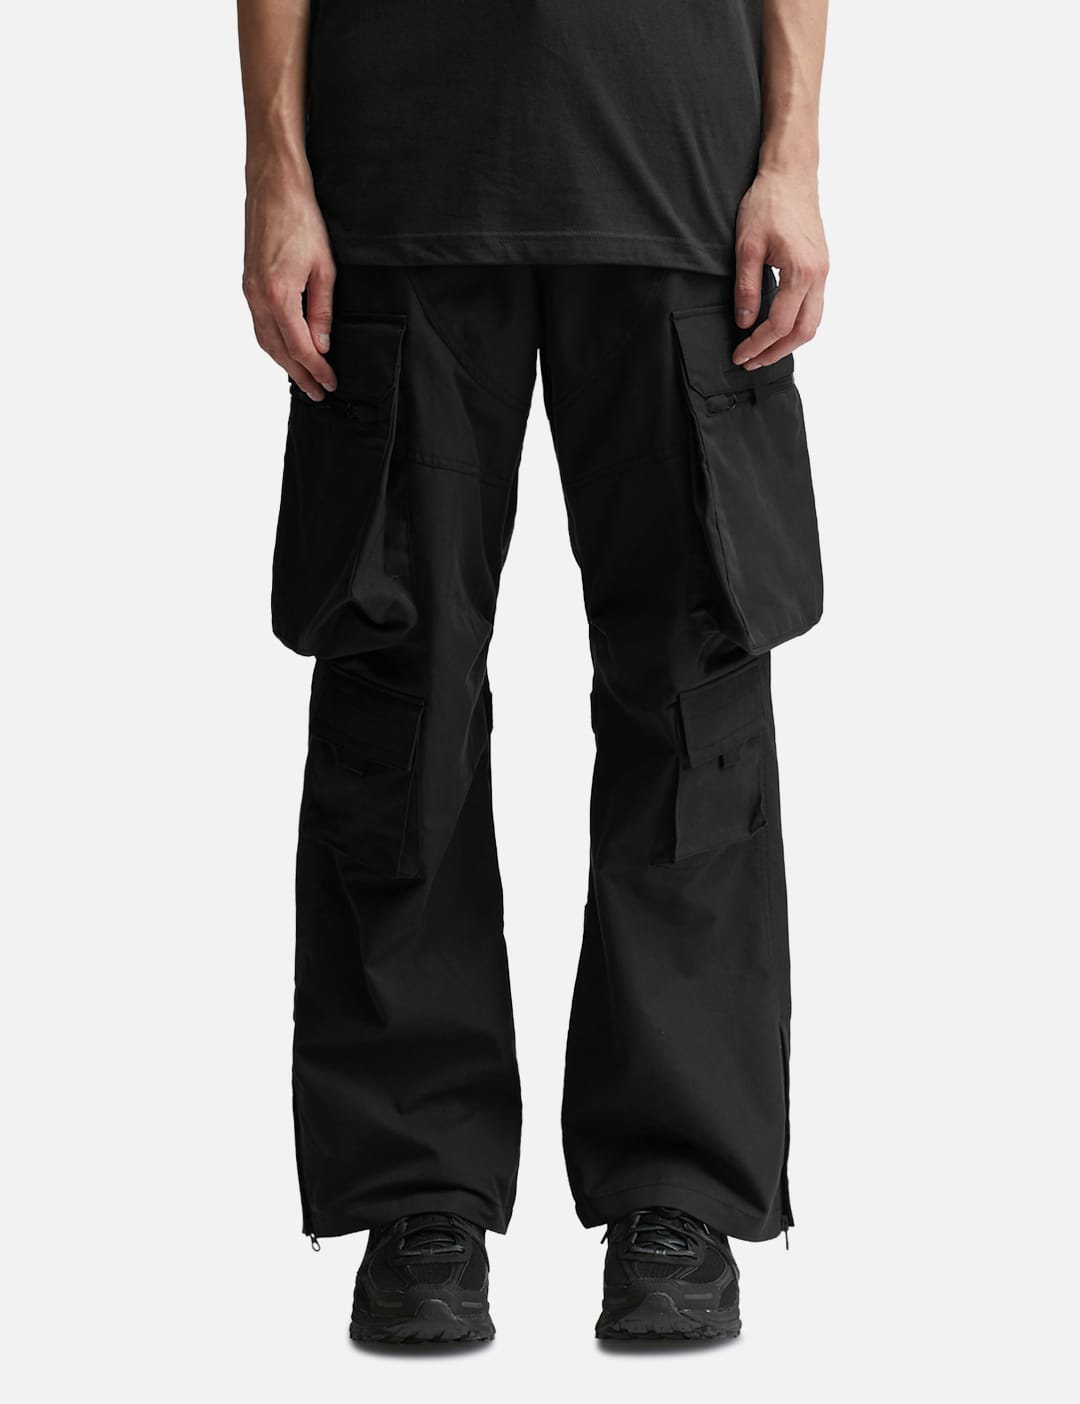 Skechers Women's Reliance Cargo Scrub Pants, Elastic Waist Scrub Pants